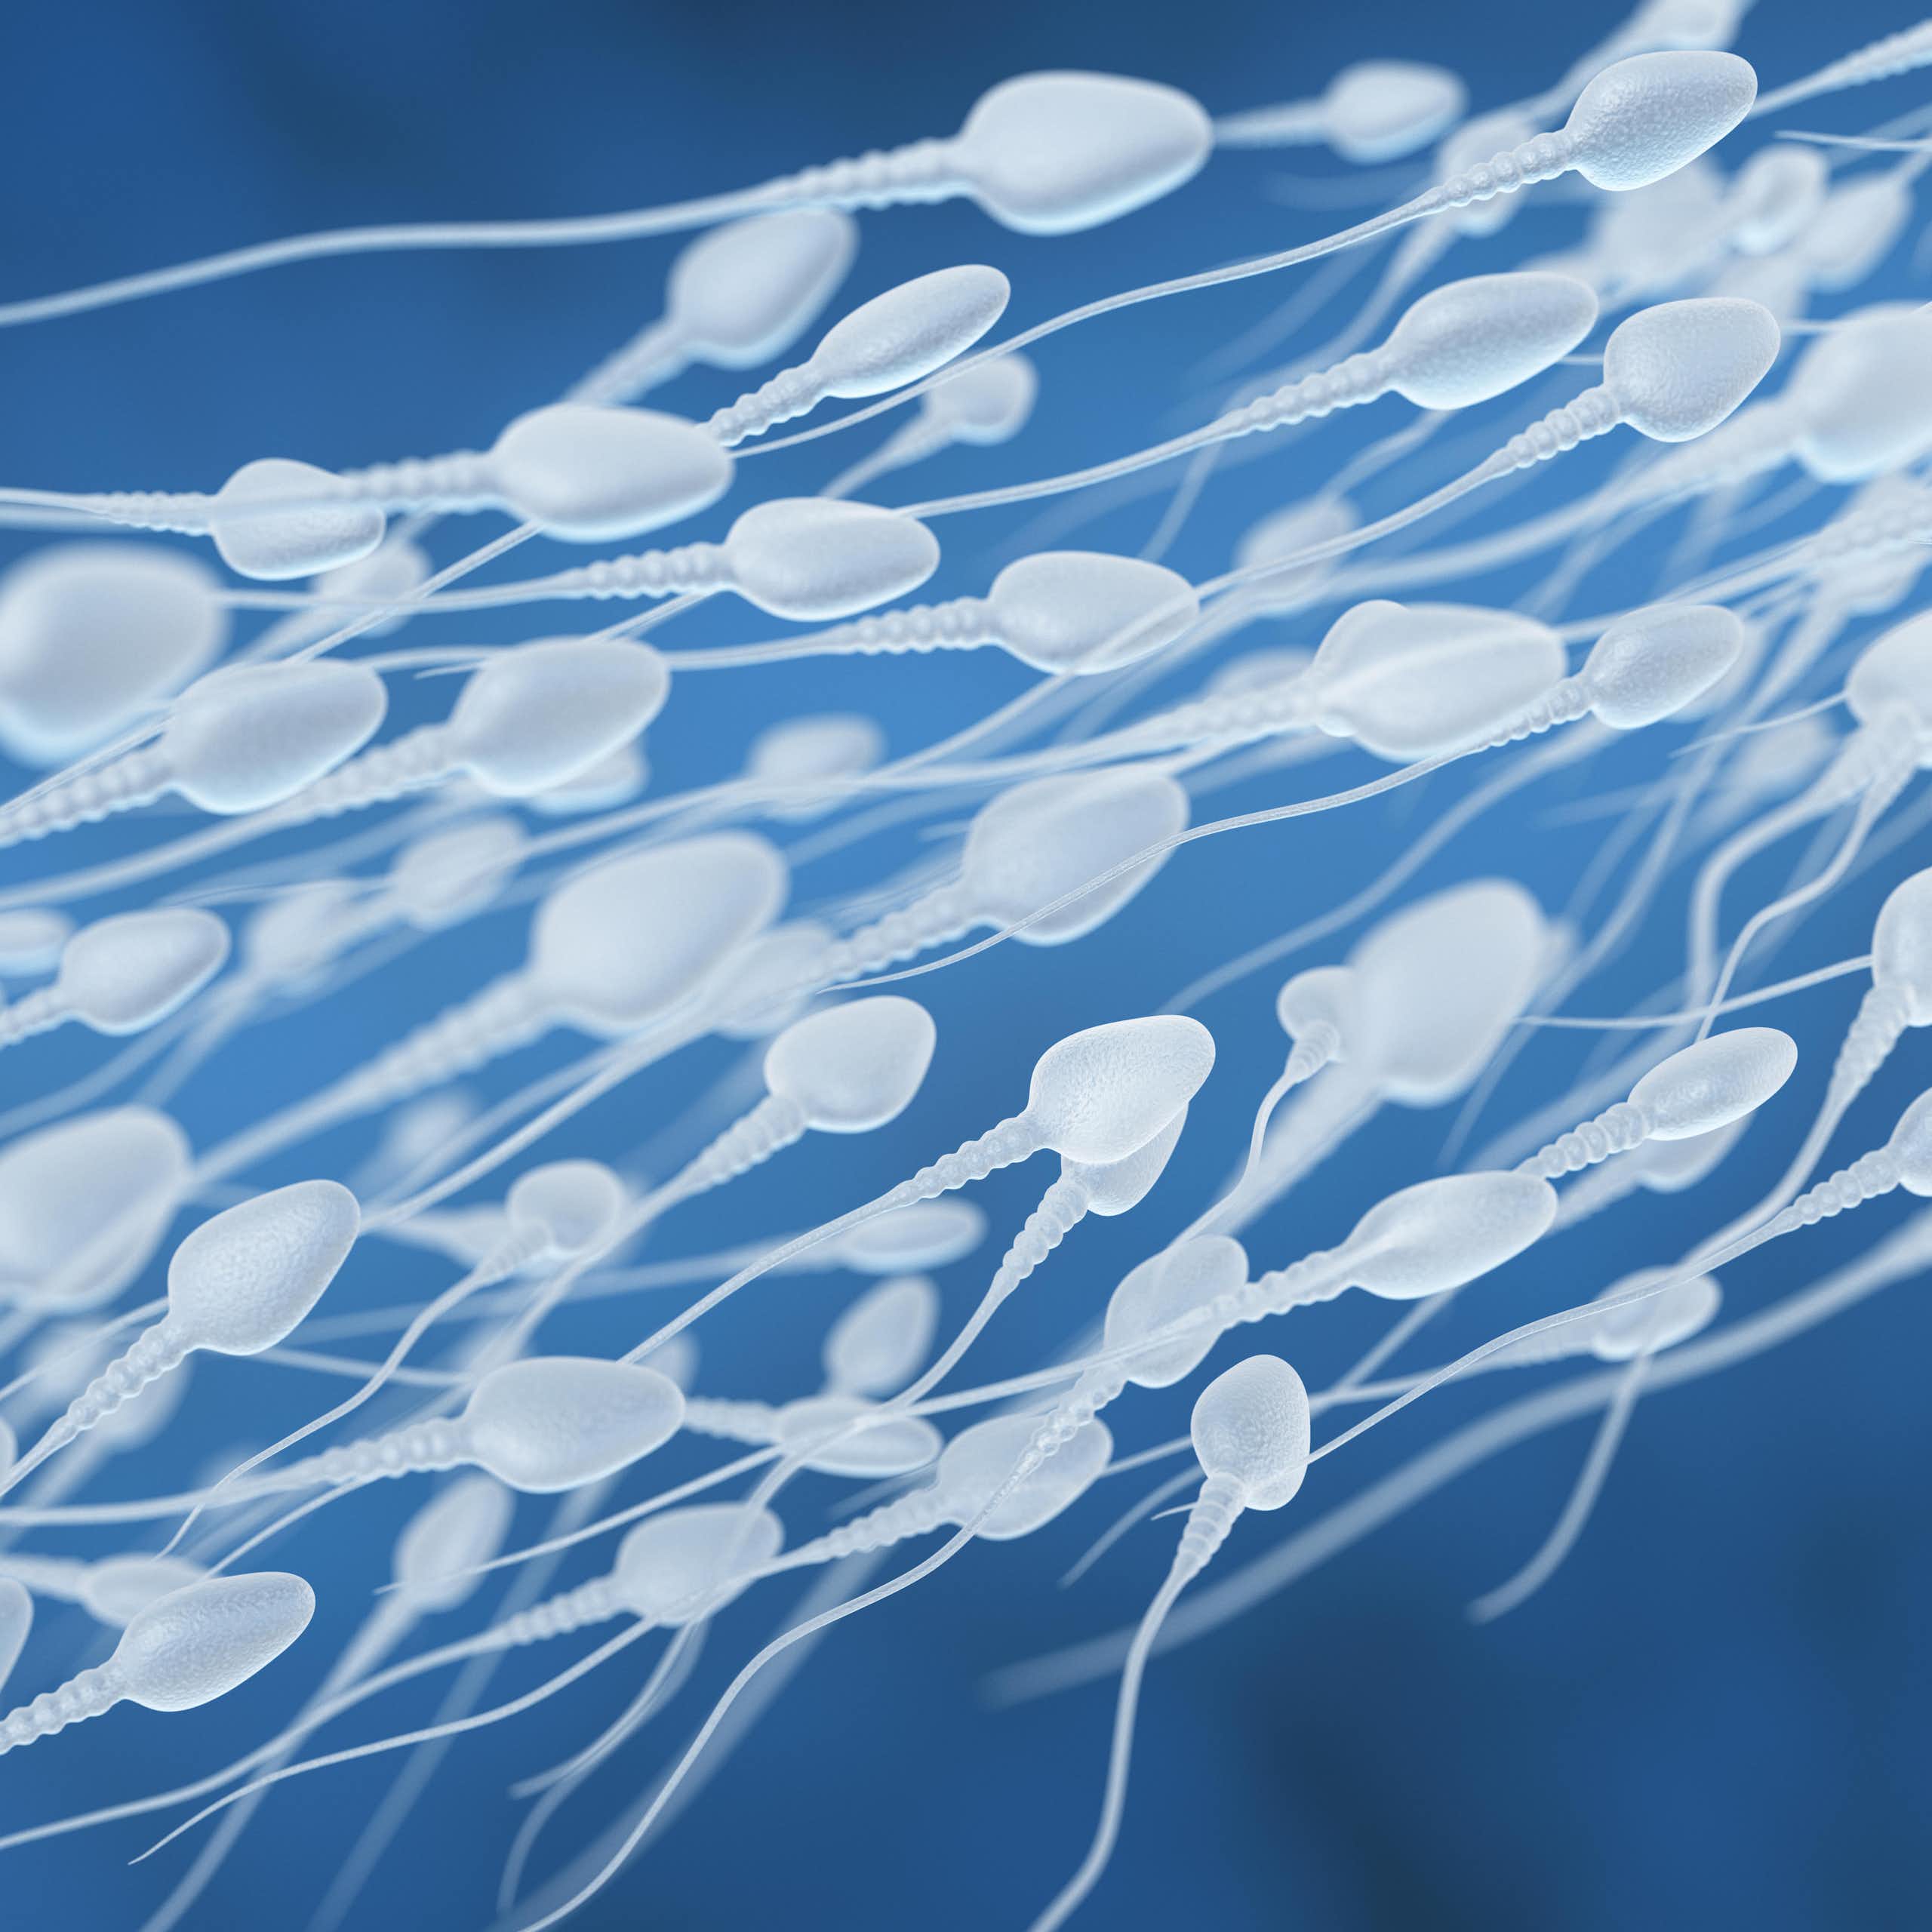 An illustration of sperm